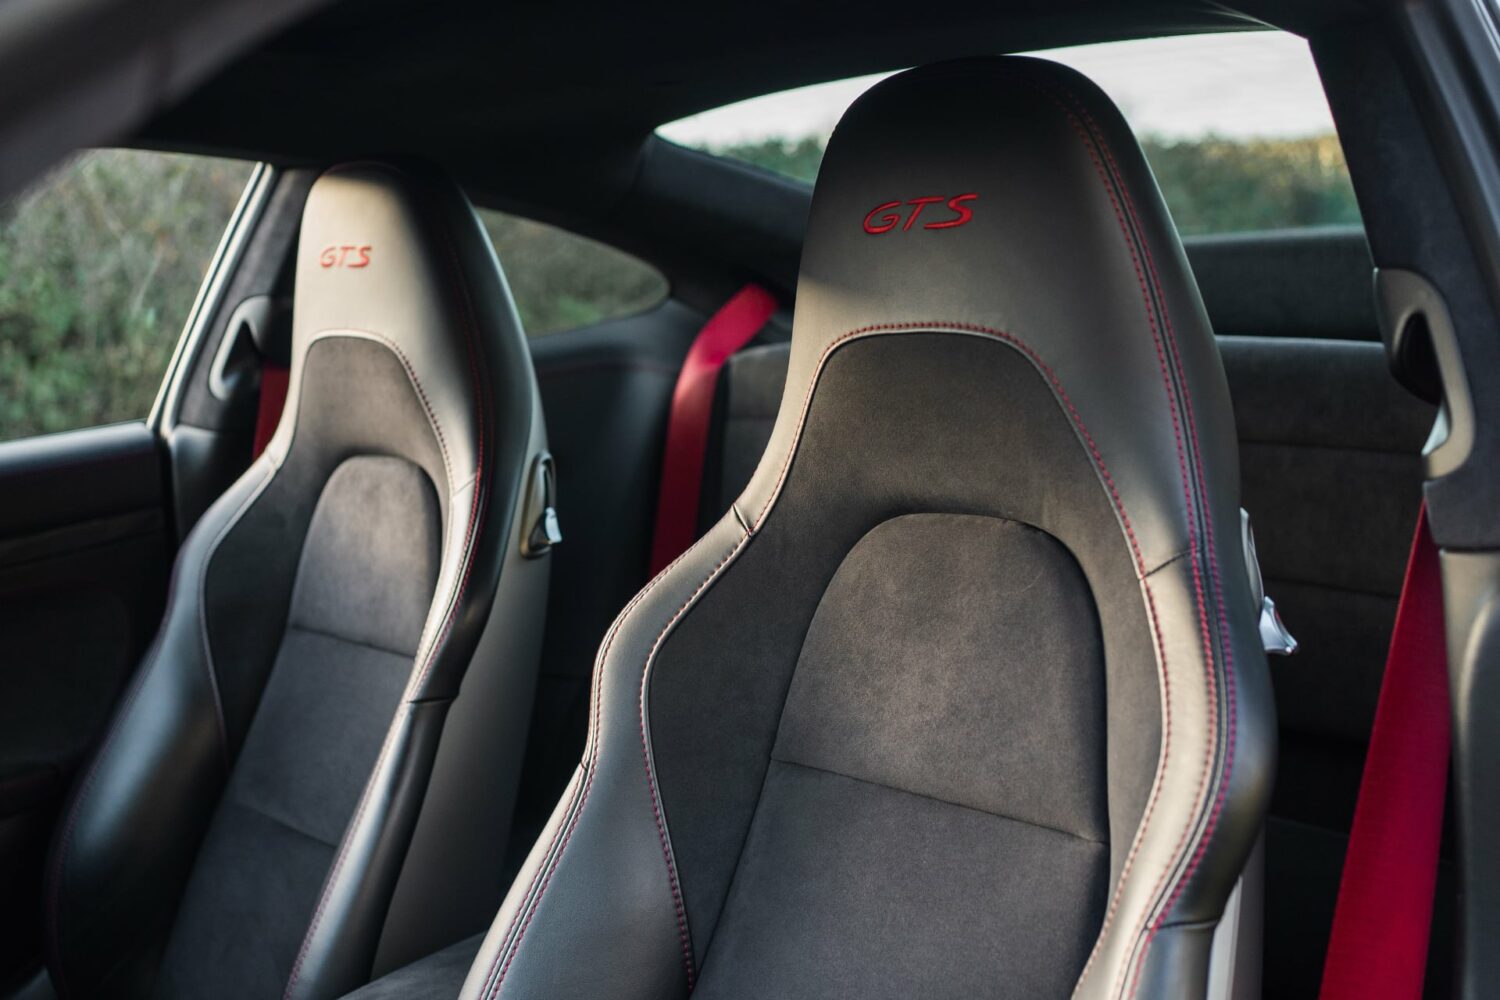 911 GTS Seats